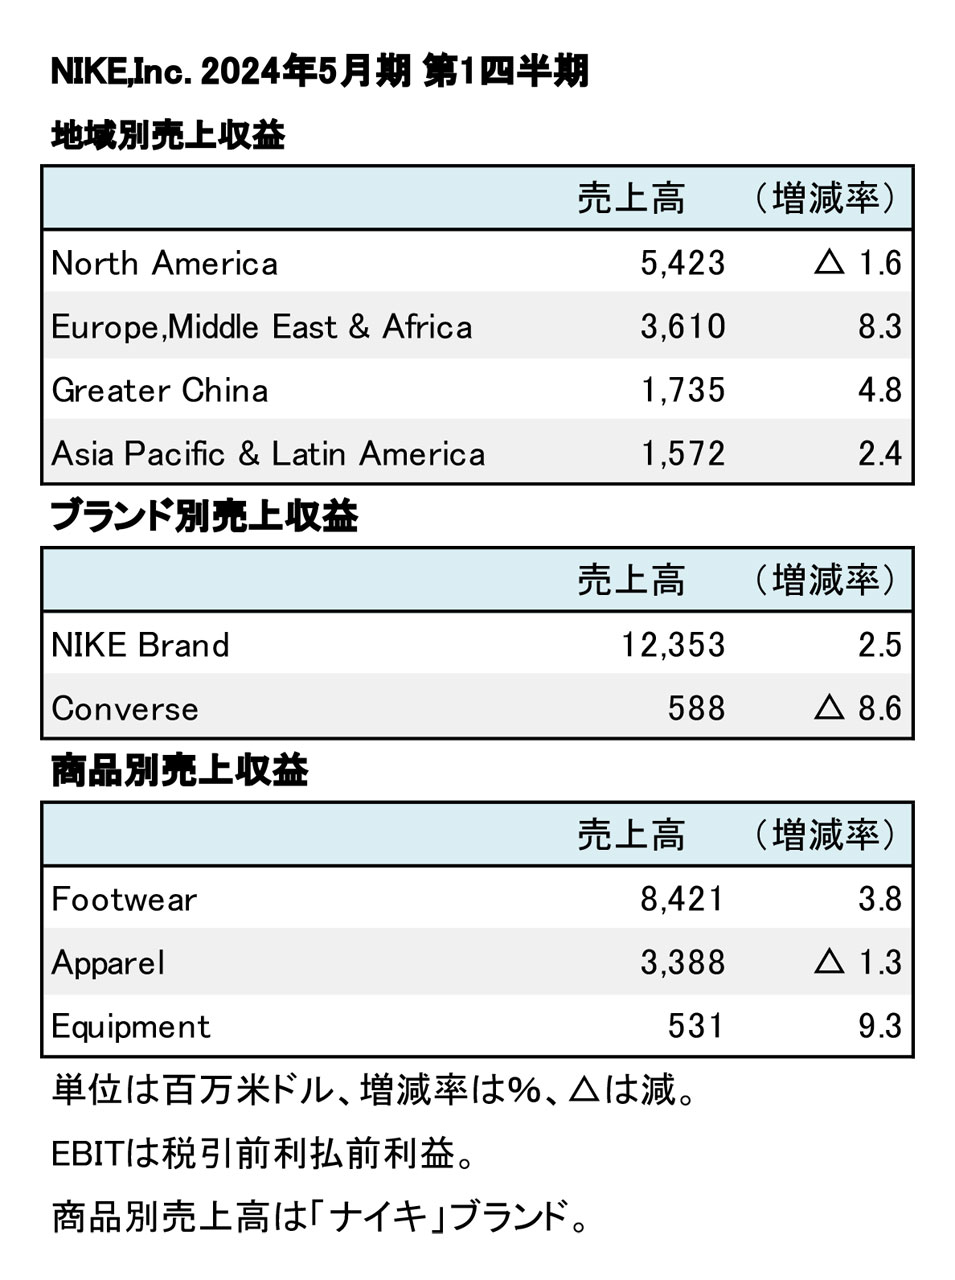 NIKE,Inc. 2024年5月期 第1四半期──増収、微減益に - Sports